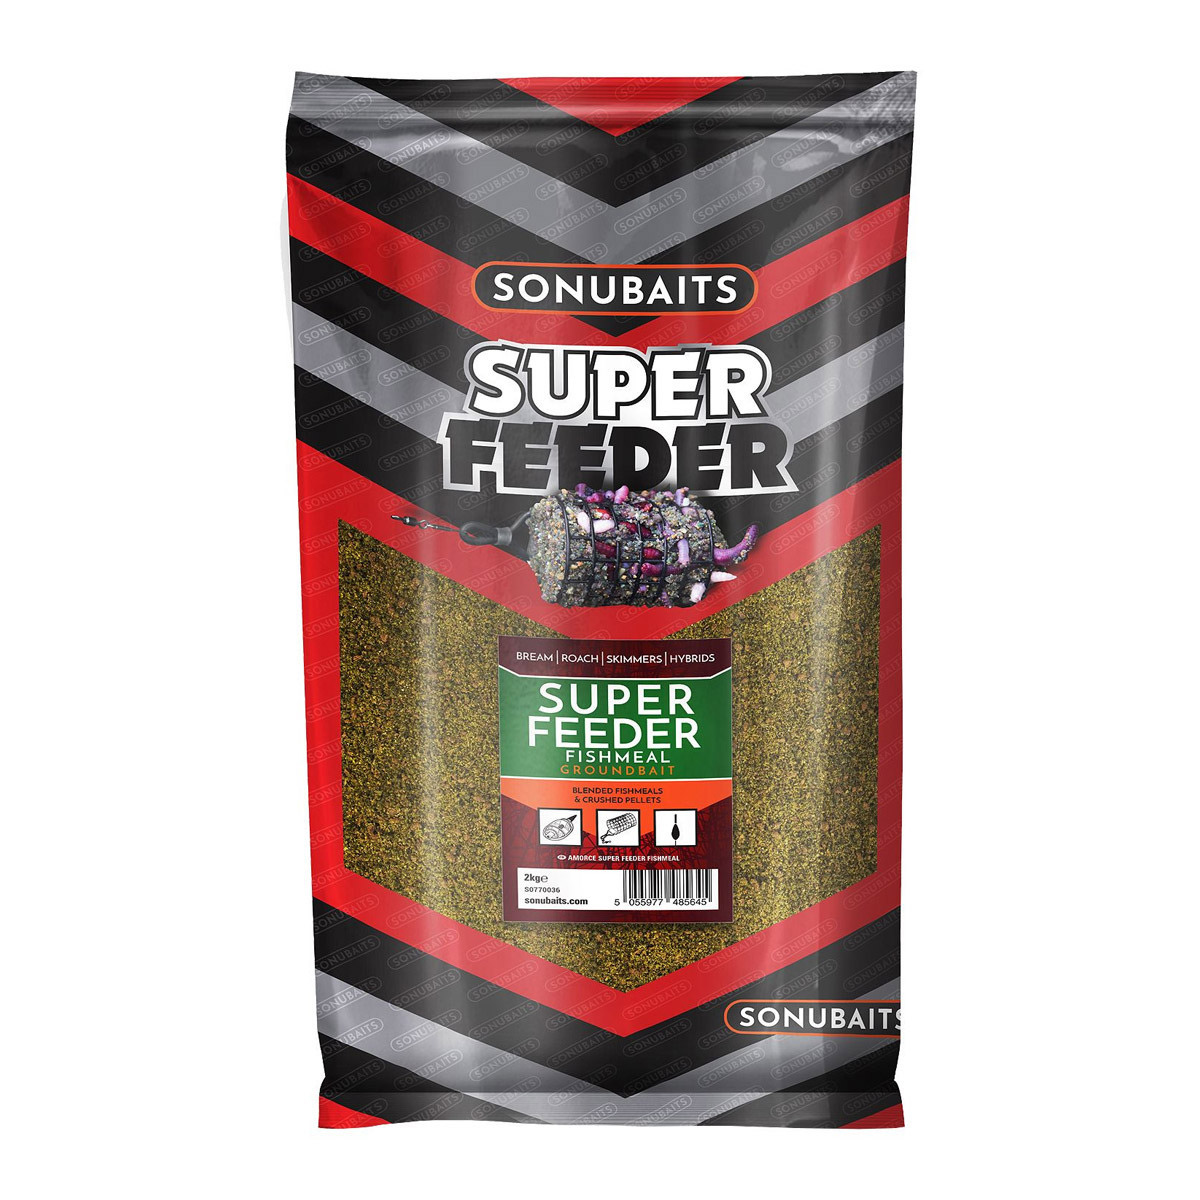 Sonubaits Super Feeder Fishmeal 2 KG